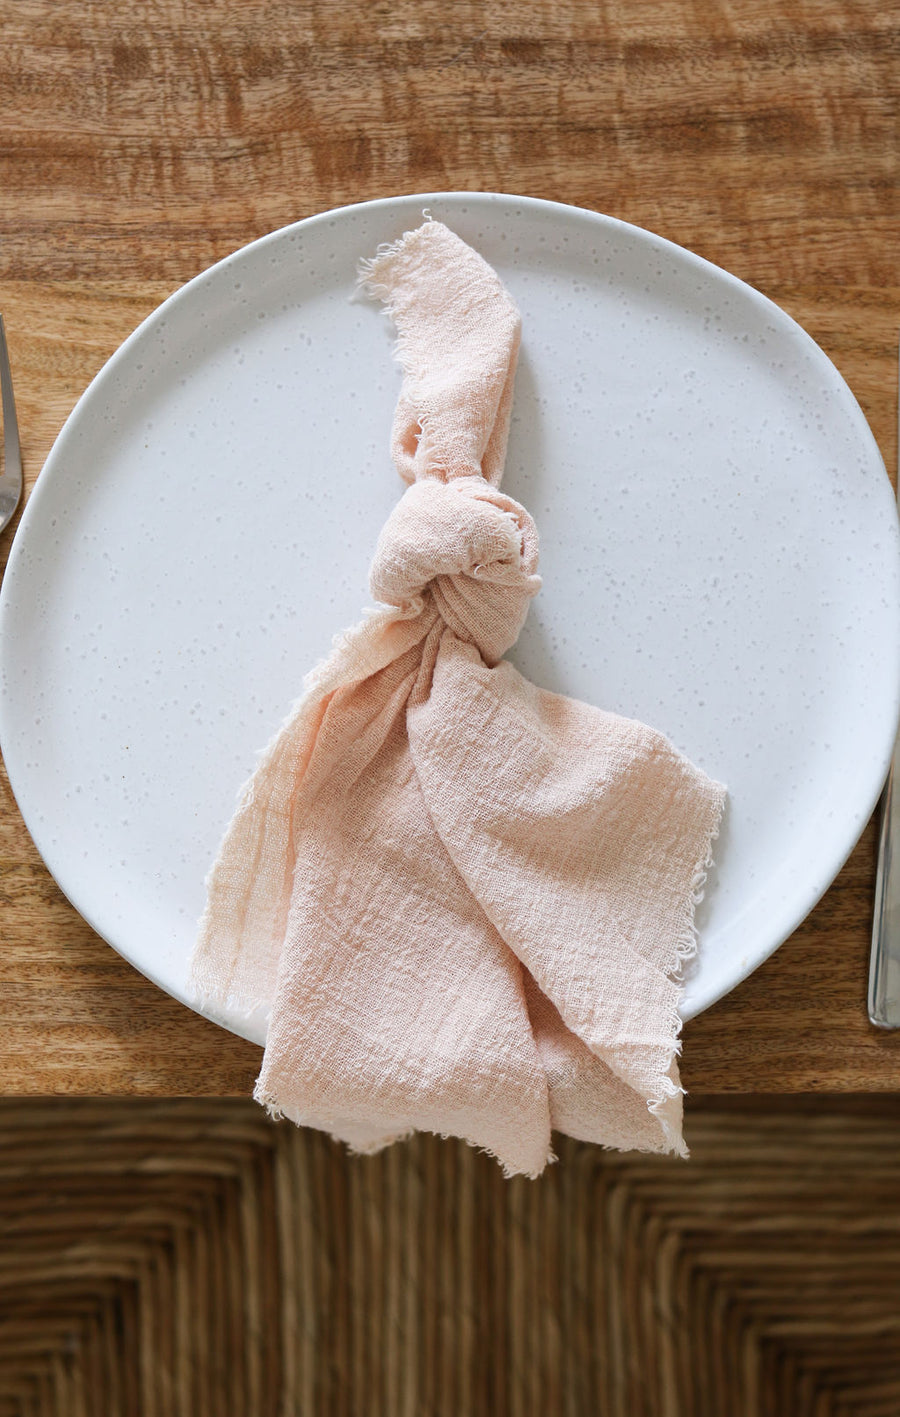 blush pink frayed napkin